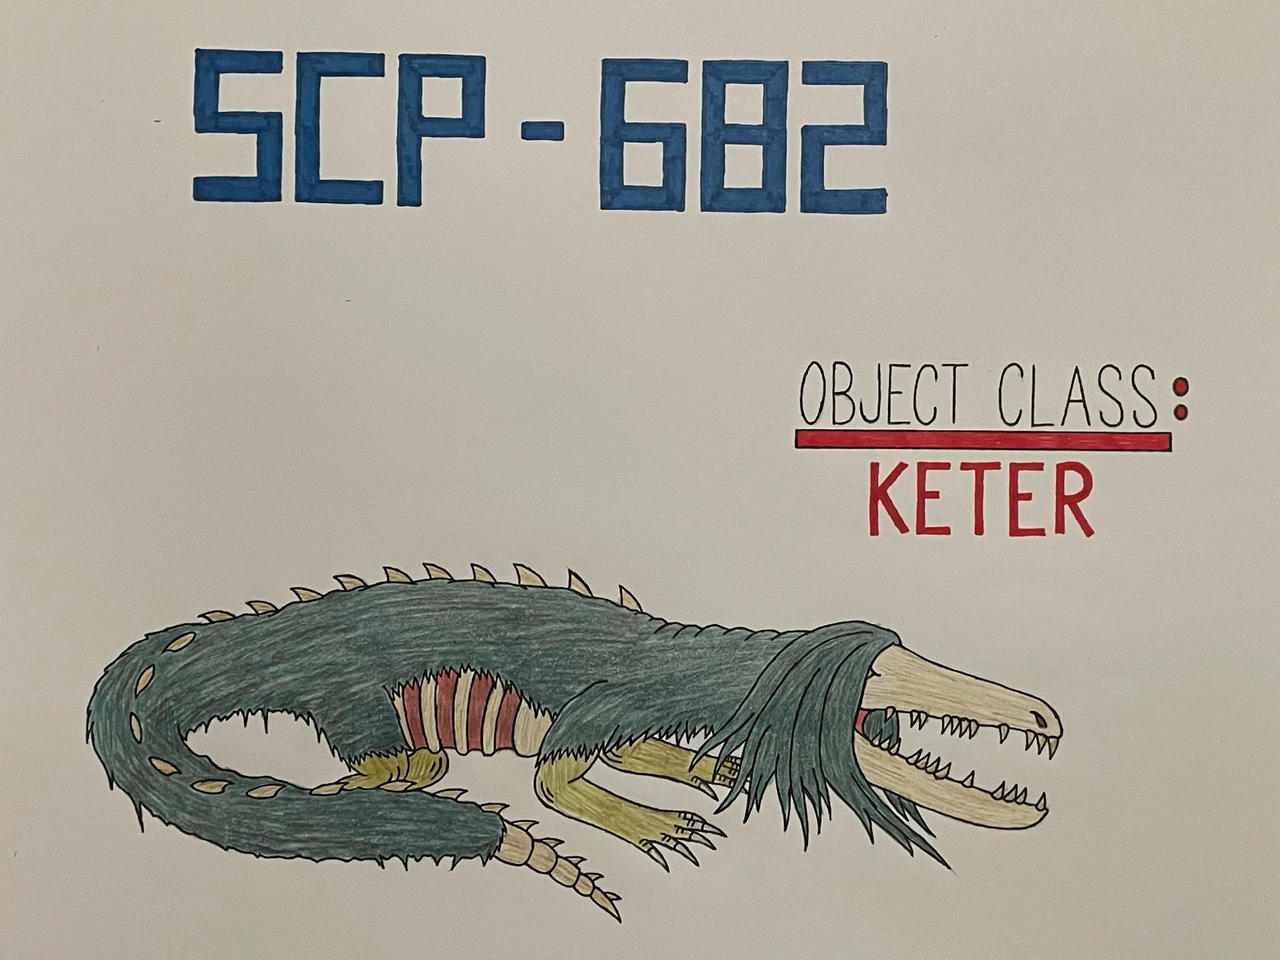 SCP-682-B, Wiki